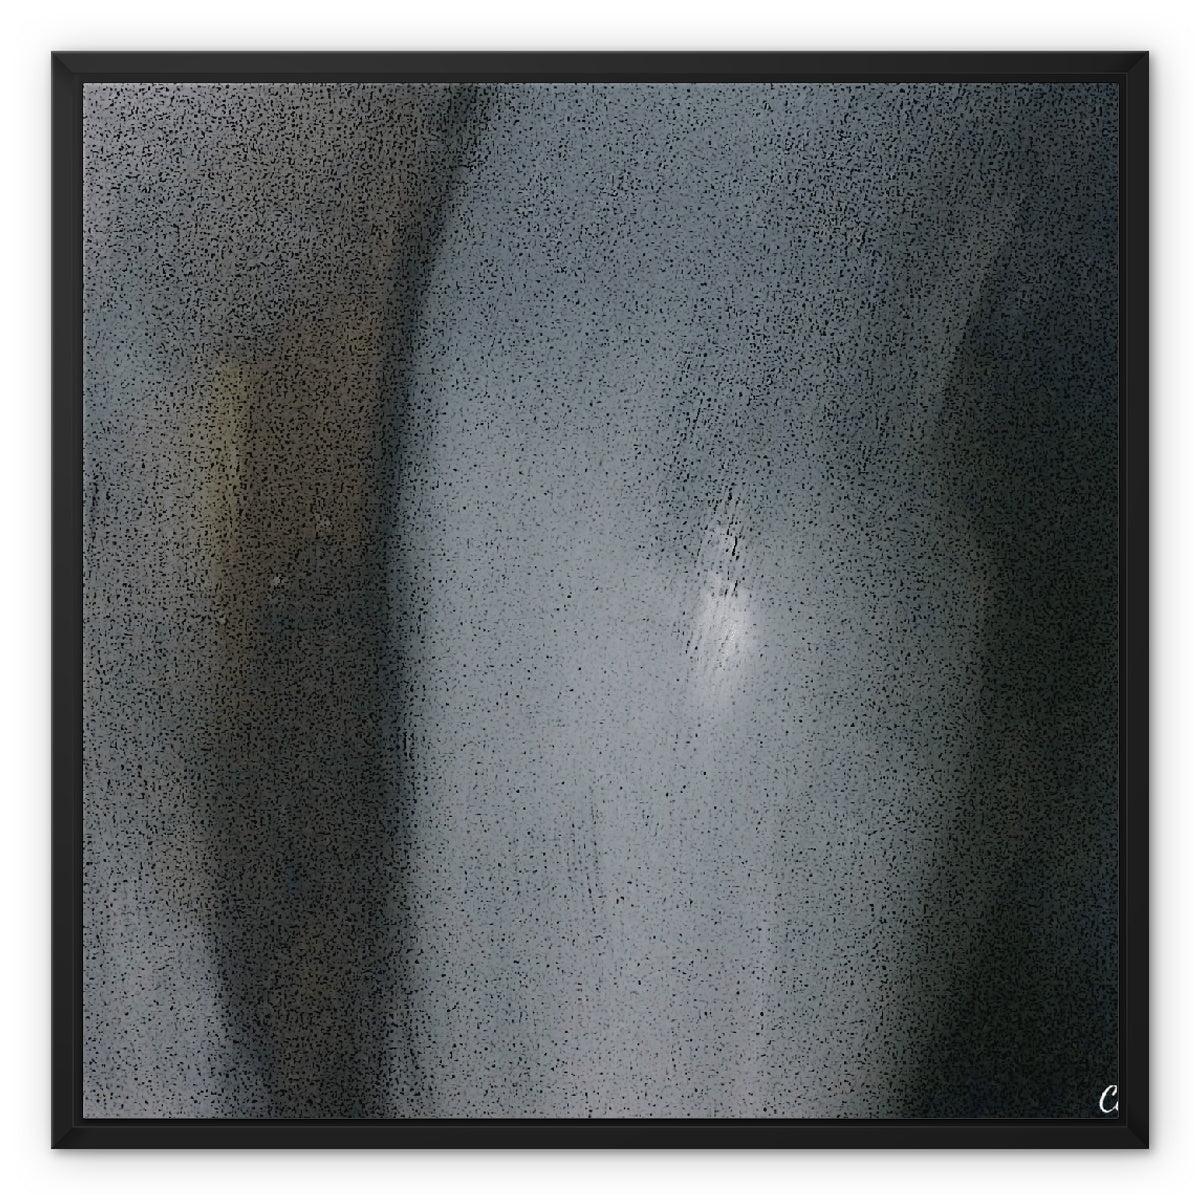 The Alien Framed Canvas